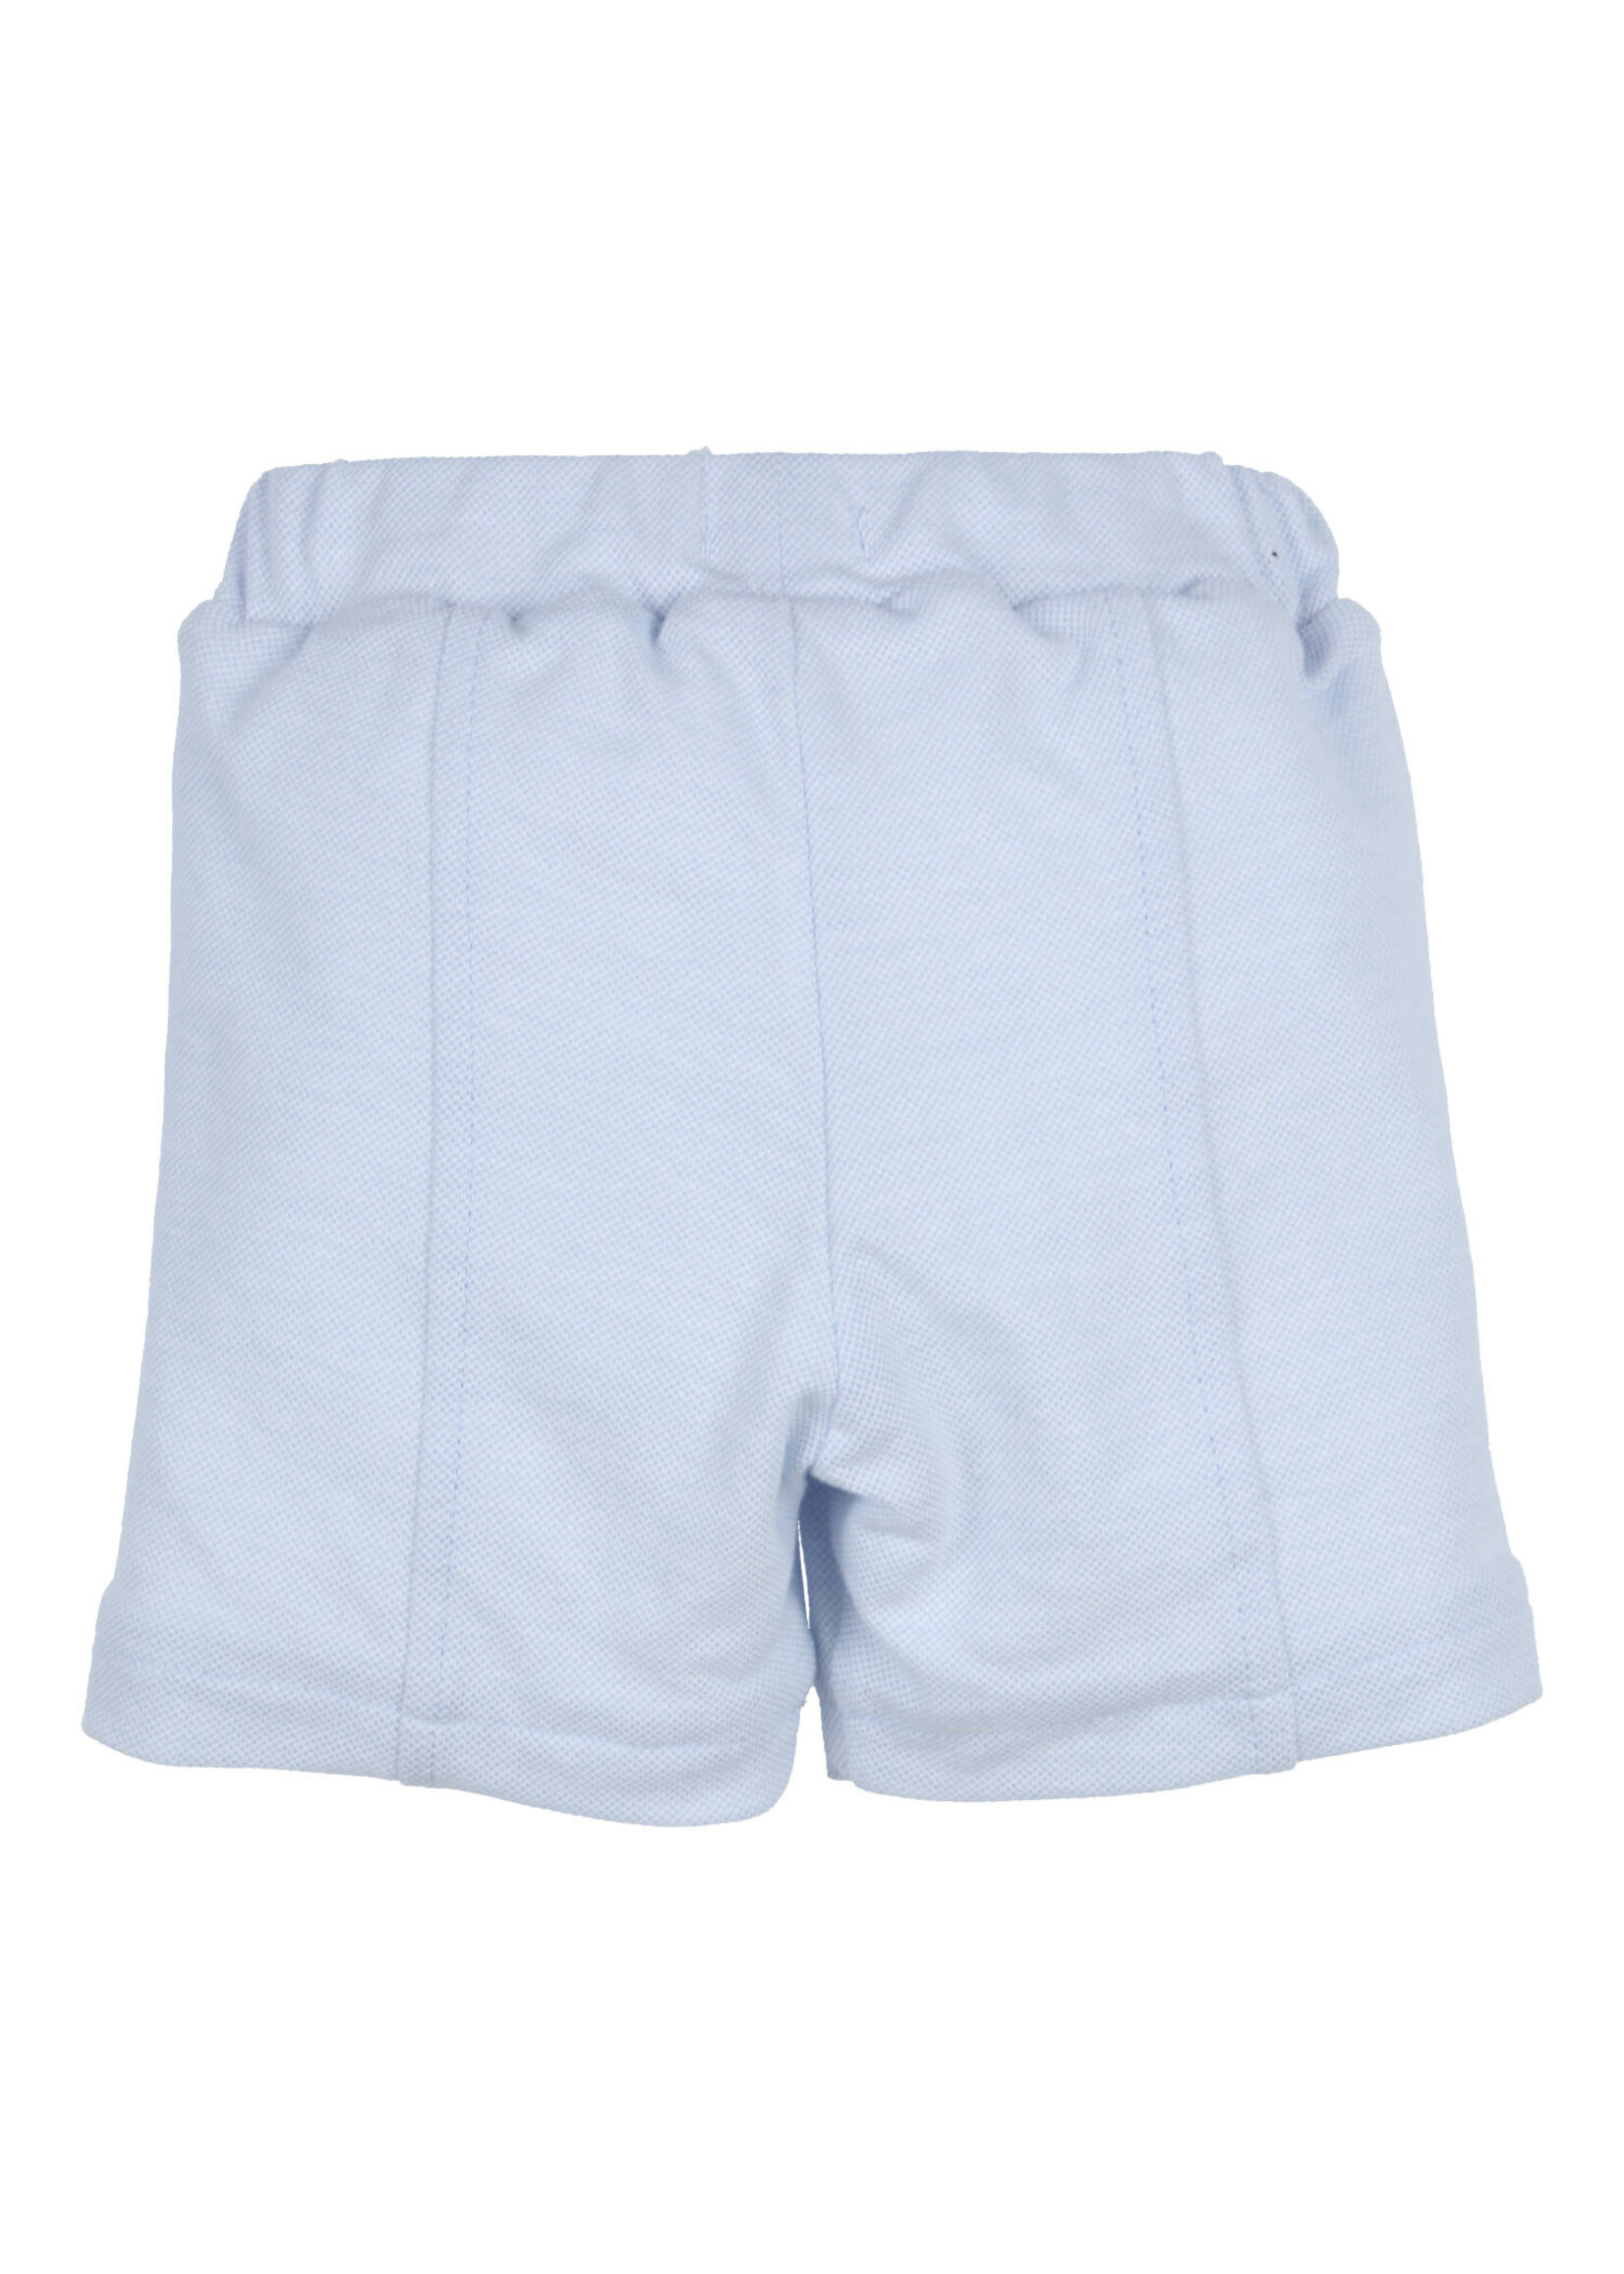 Gymp Boys Shorts Carlo 400-4151-20 Light Blue